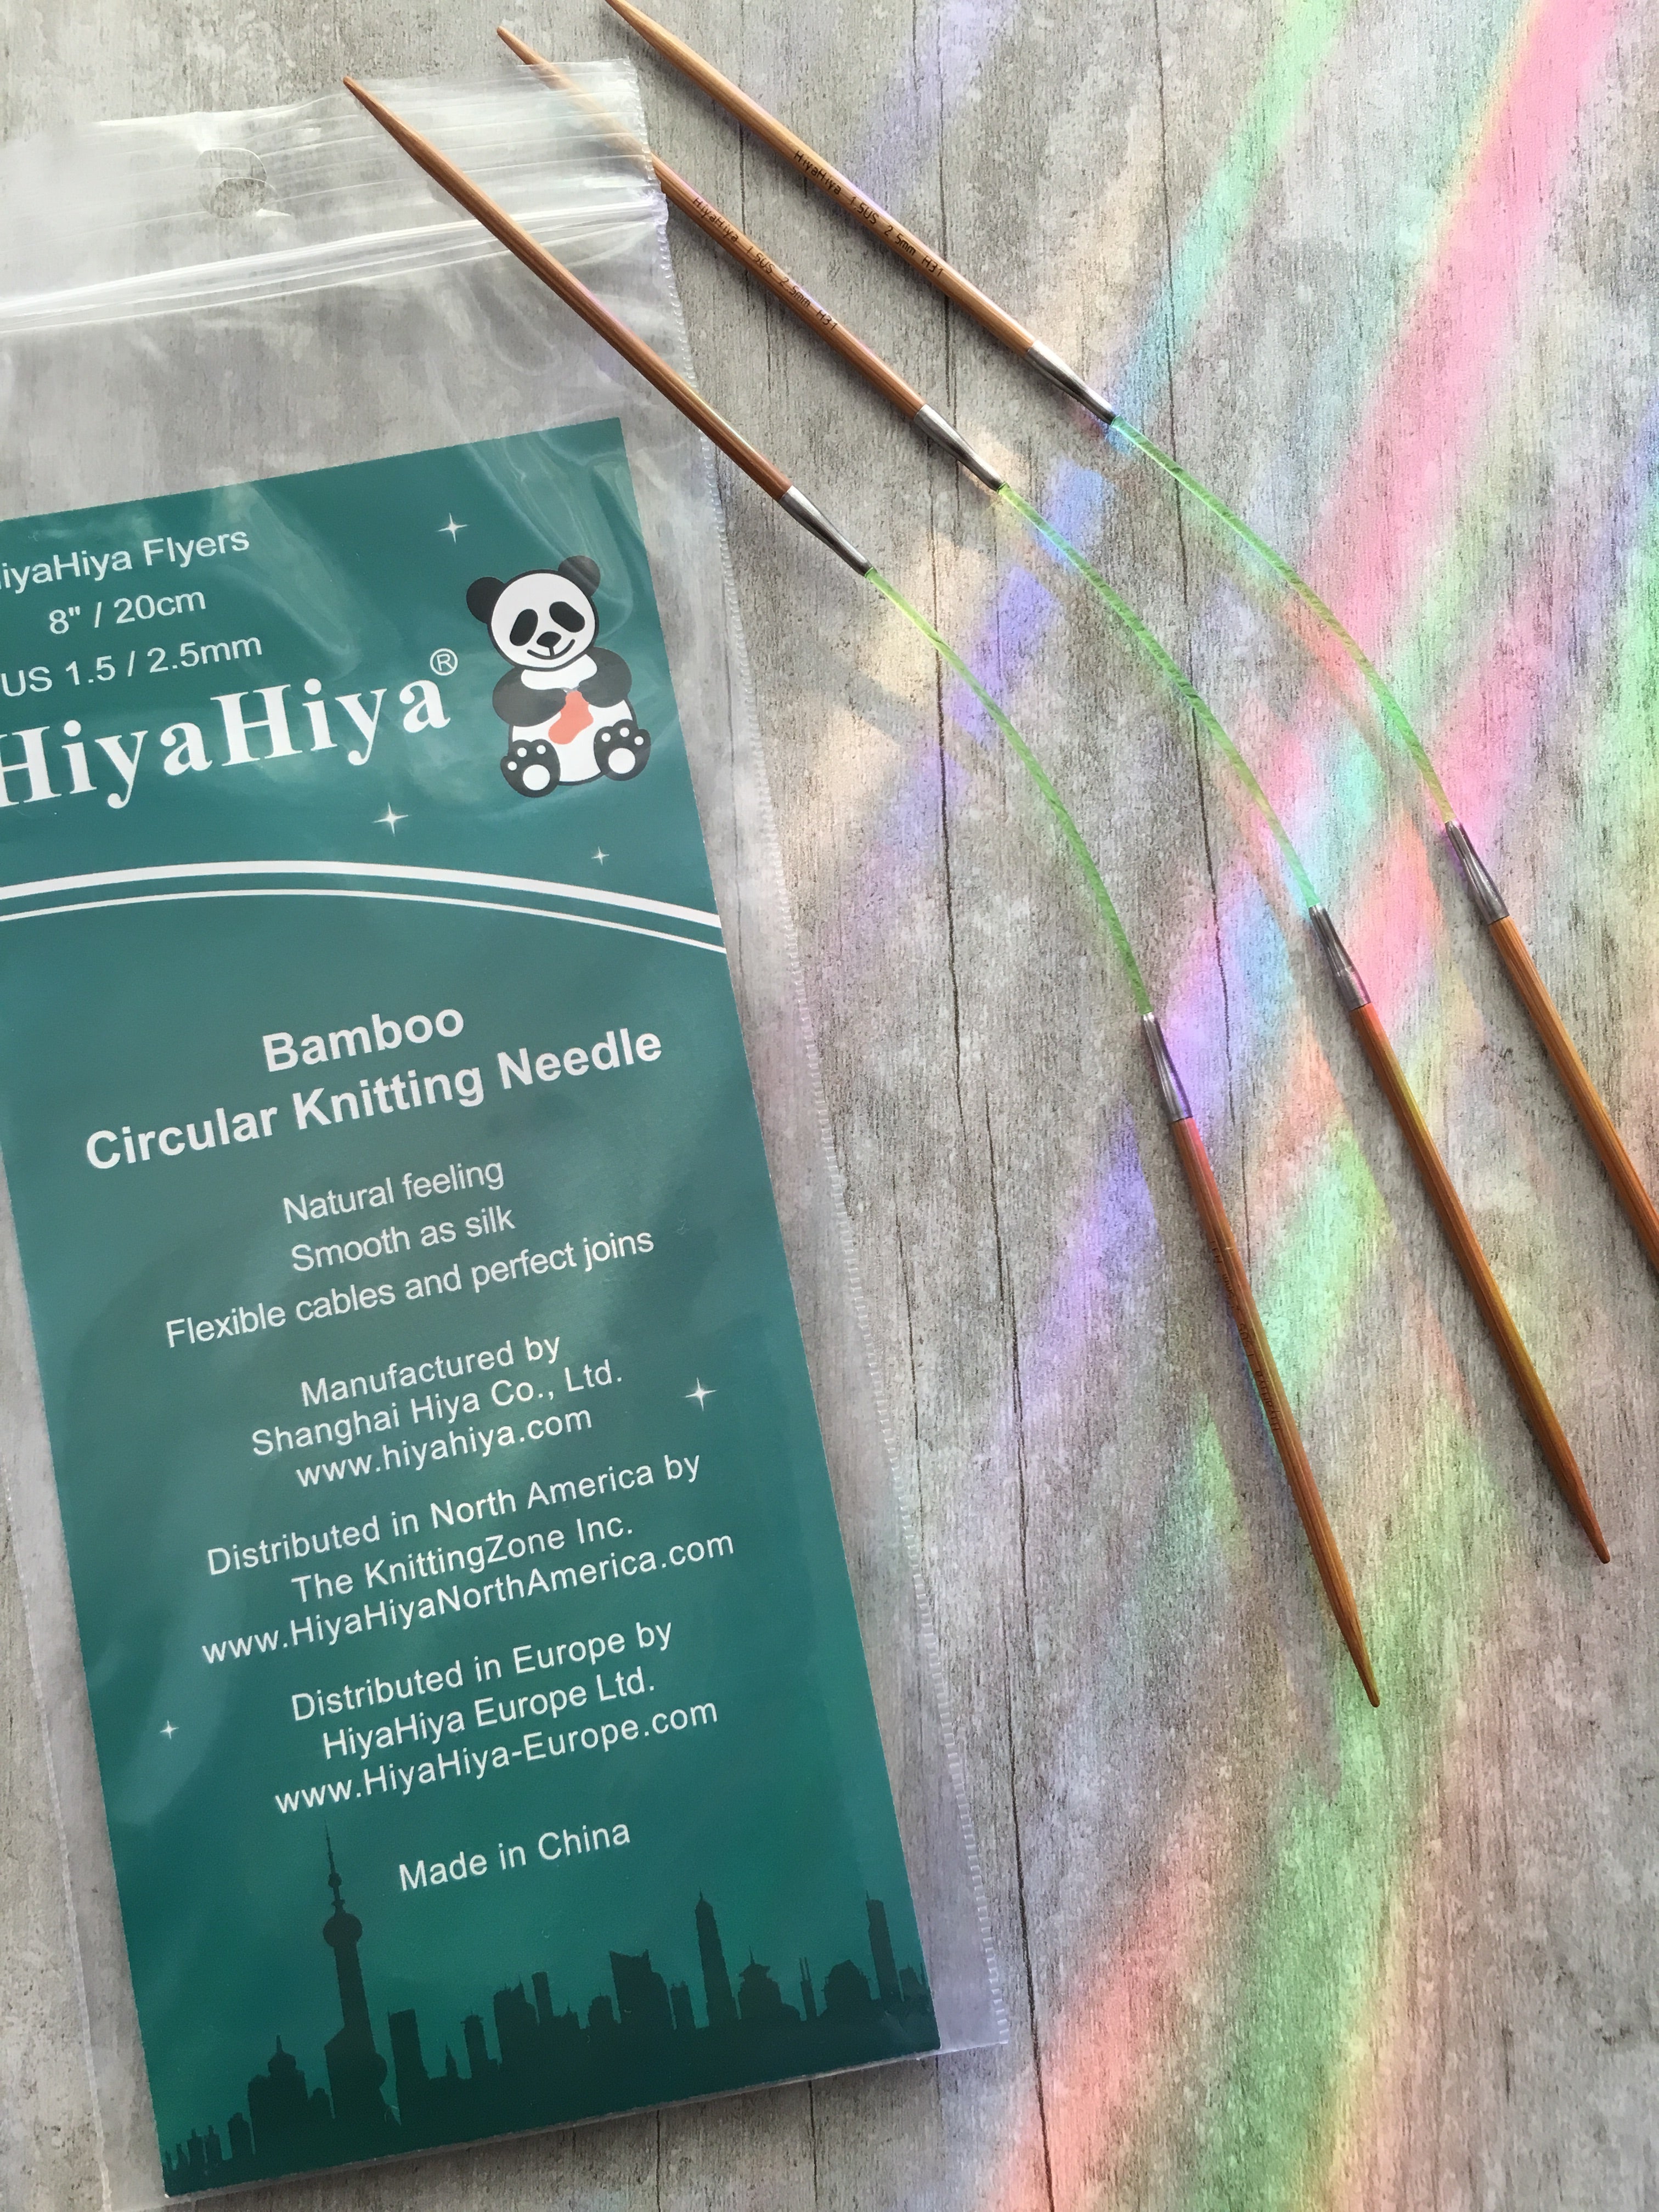 HiyaHiya 8" / 20cm Bamboo Flyer Set  - Flexible Double Pointed Knitting Needles